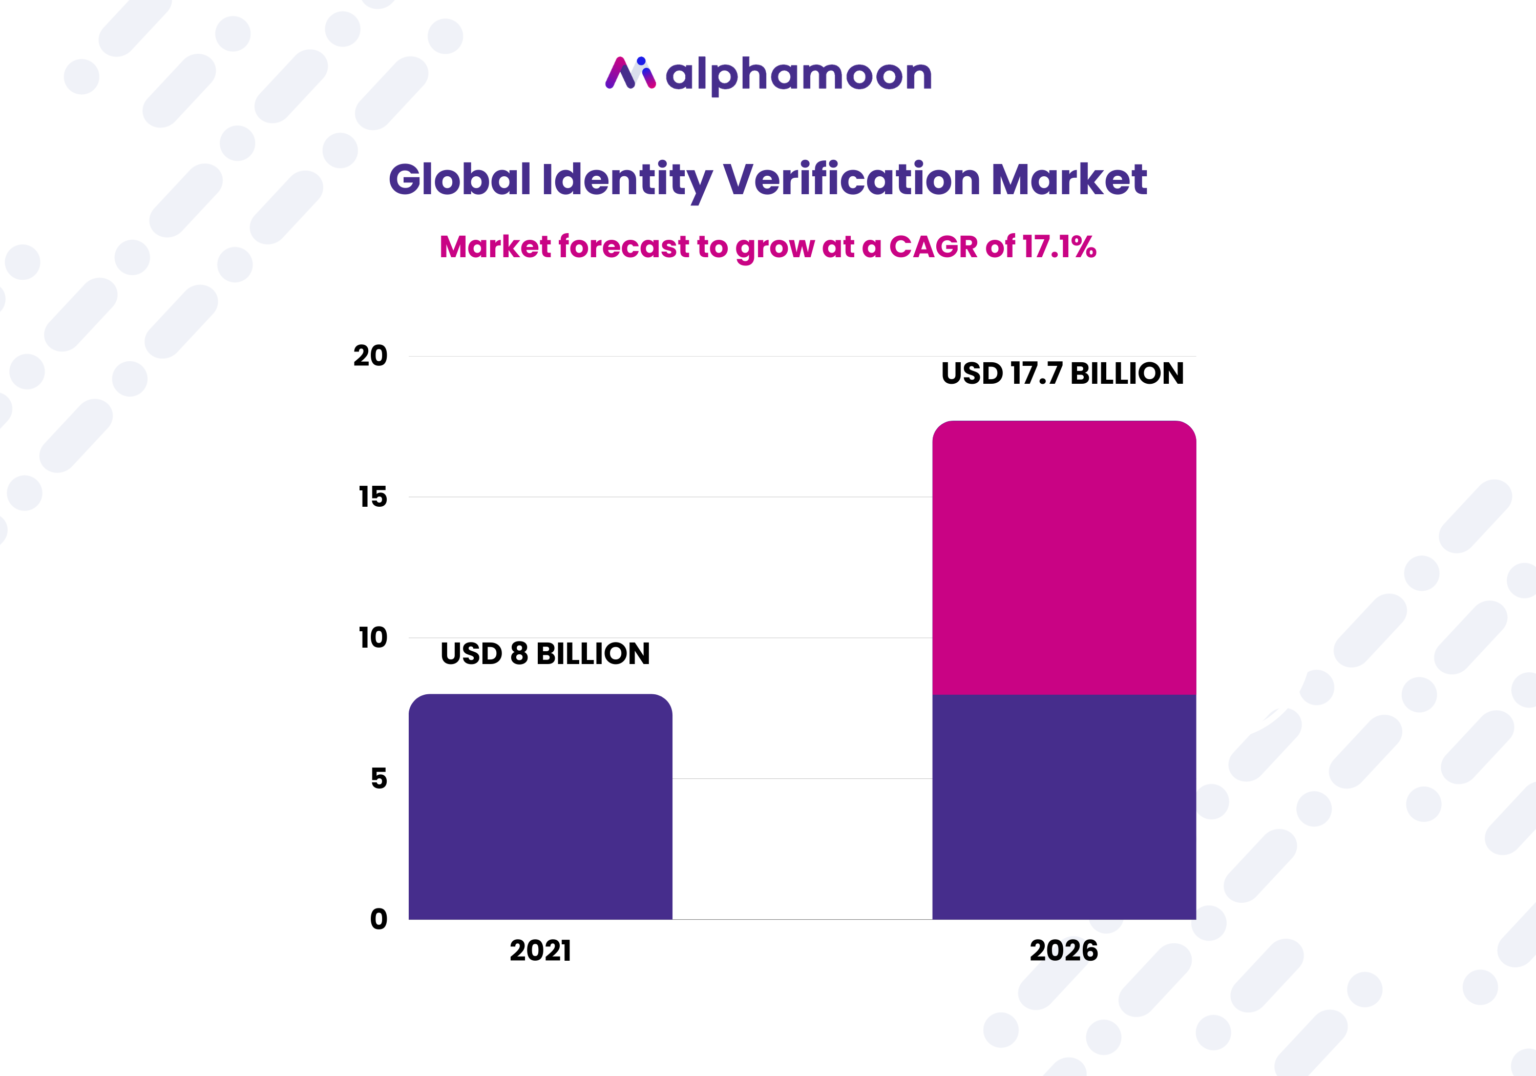 Global Identity Verification Market